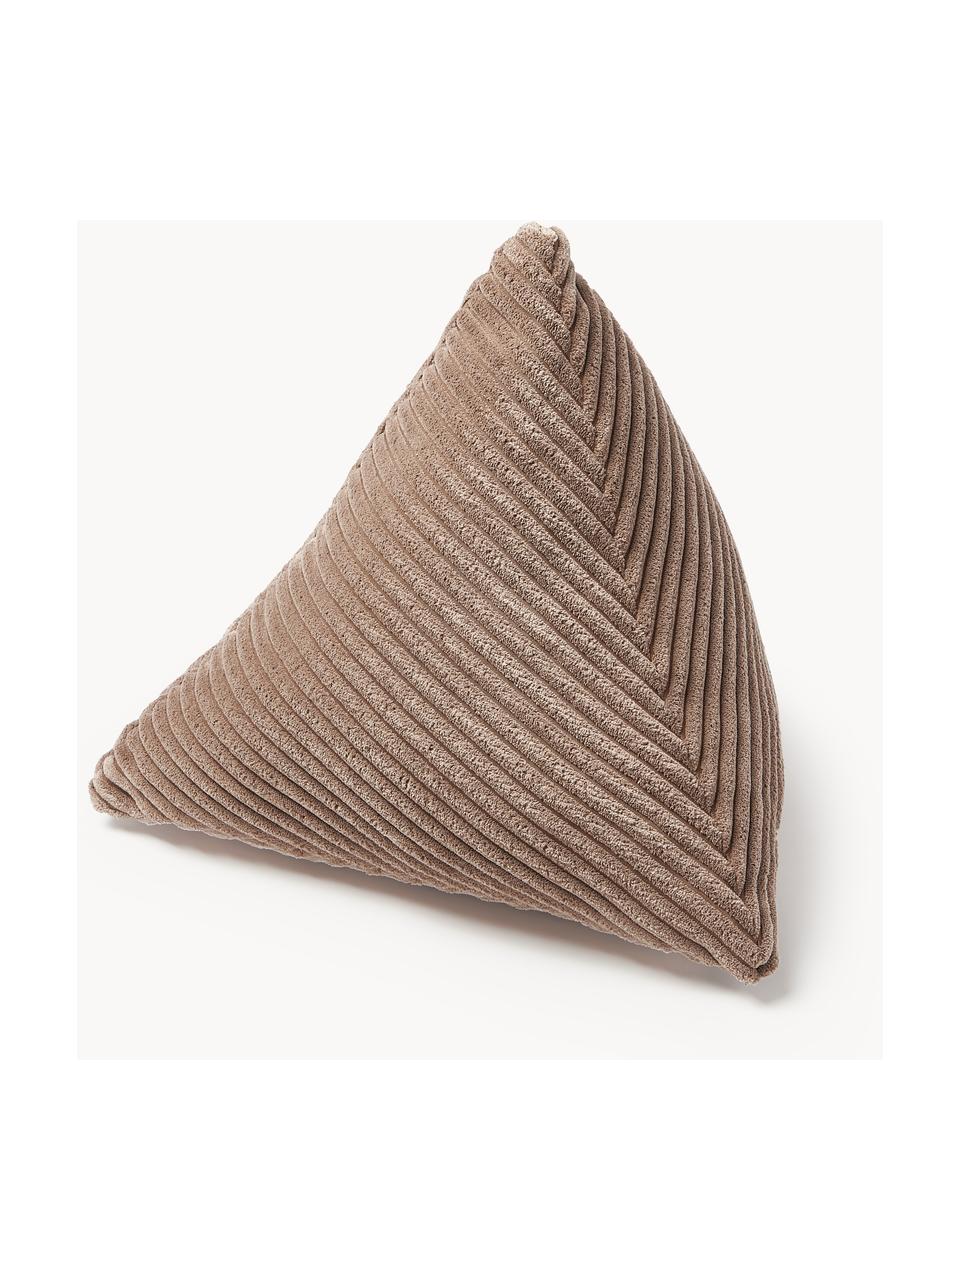 Driehoekige corduroy kussen Kylen, Nougat, B 40 x L 40 cm